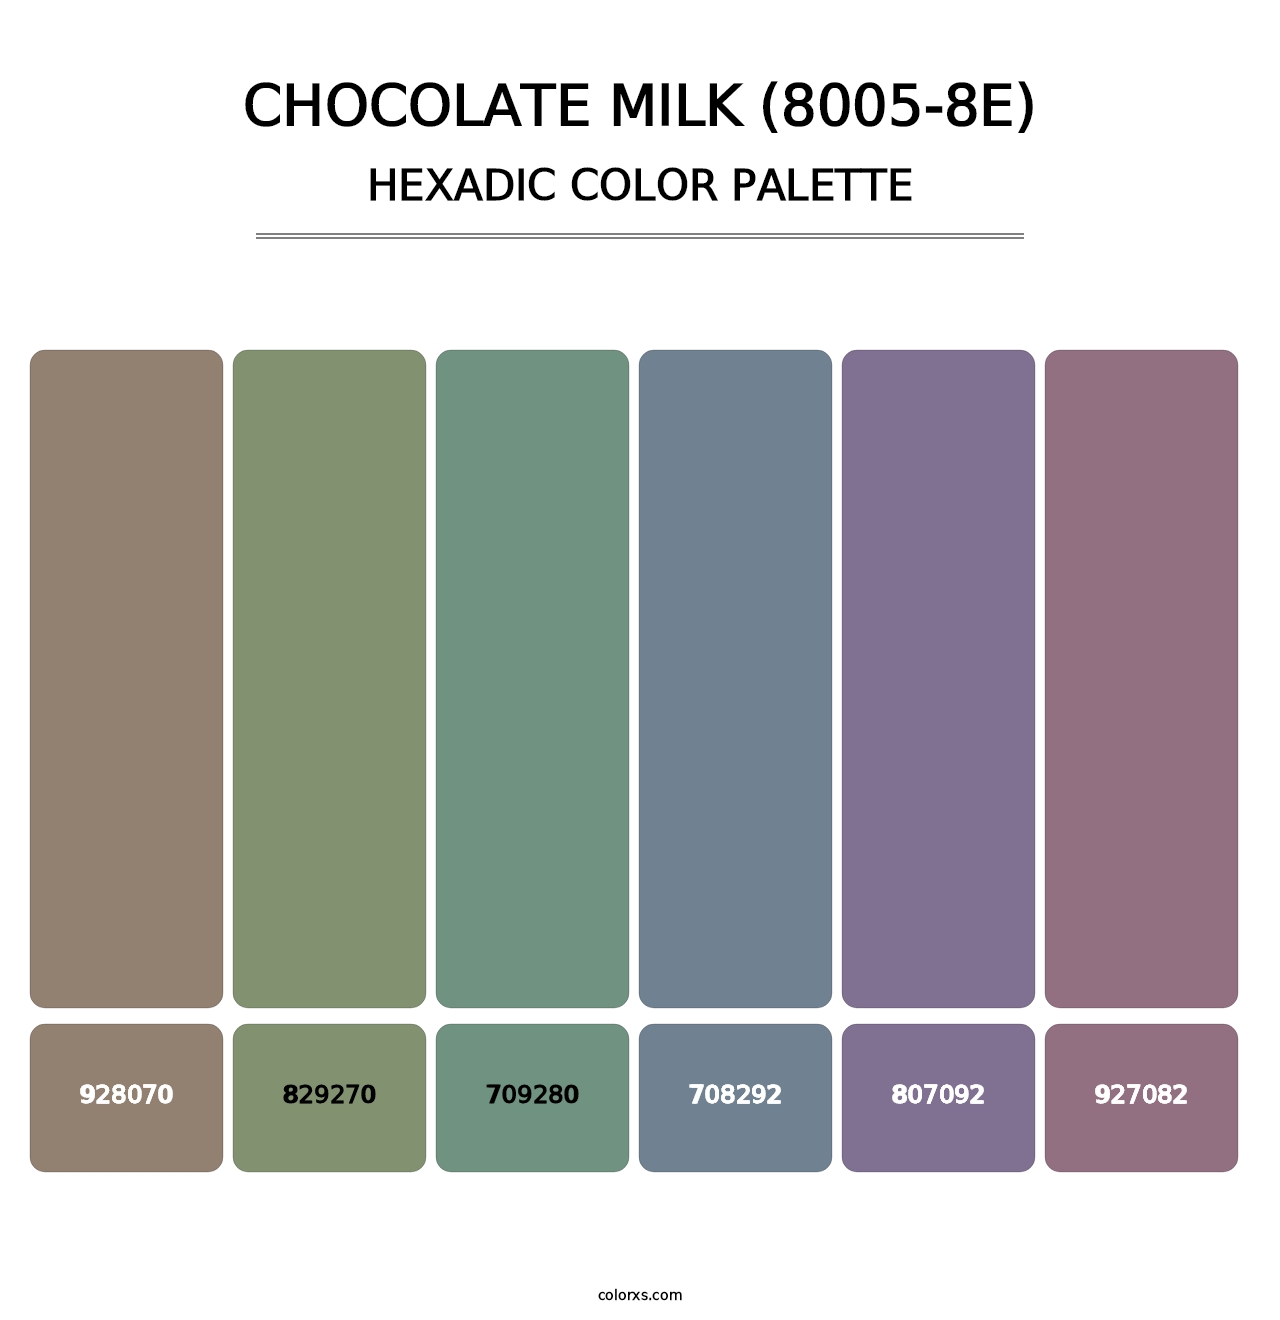 Chocolate Milk (8005-8E) - Hexadic Color Palette